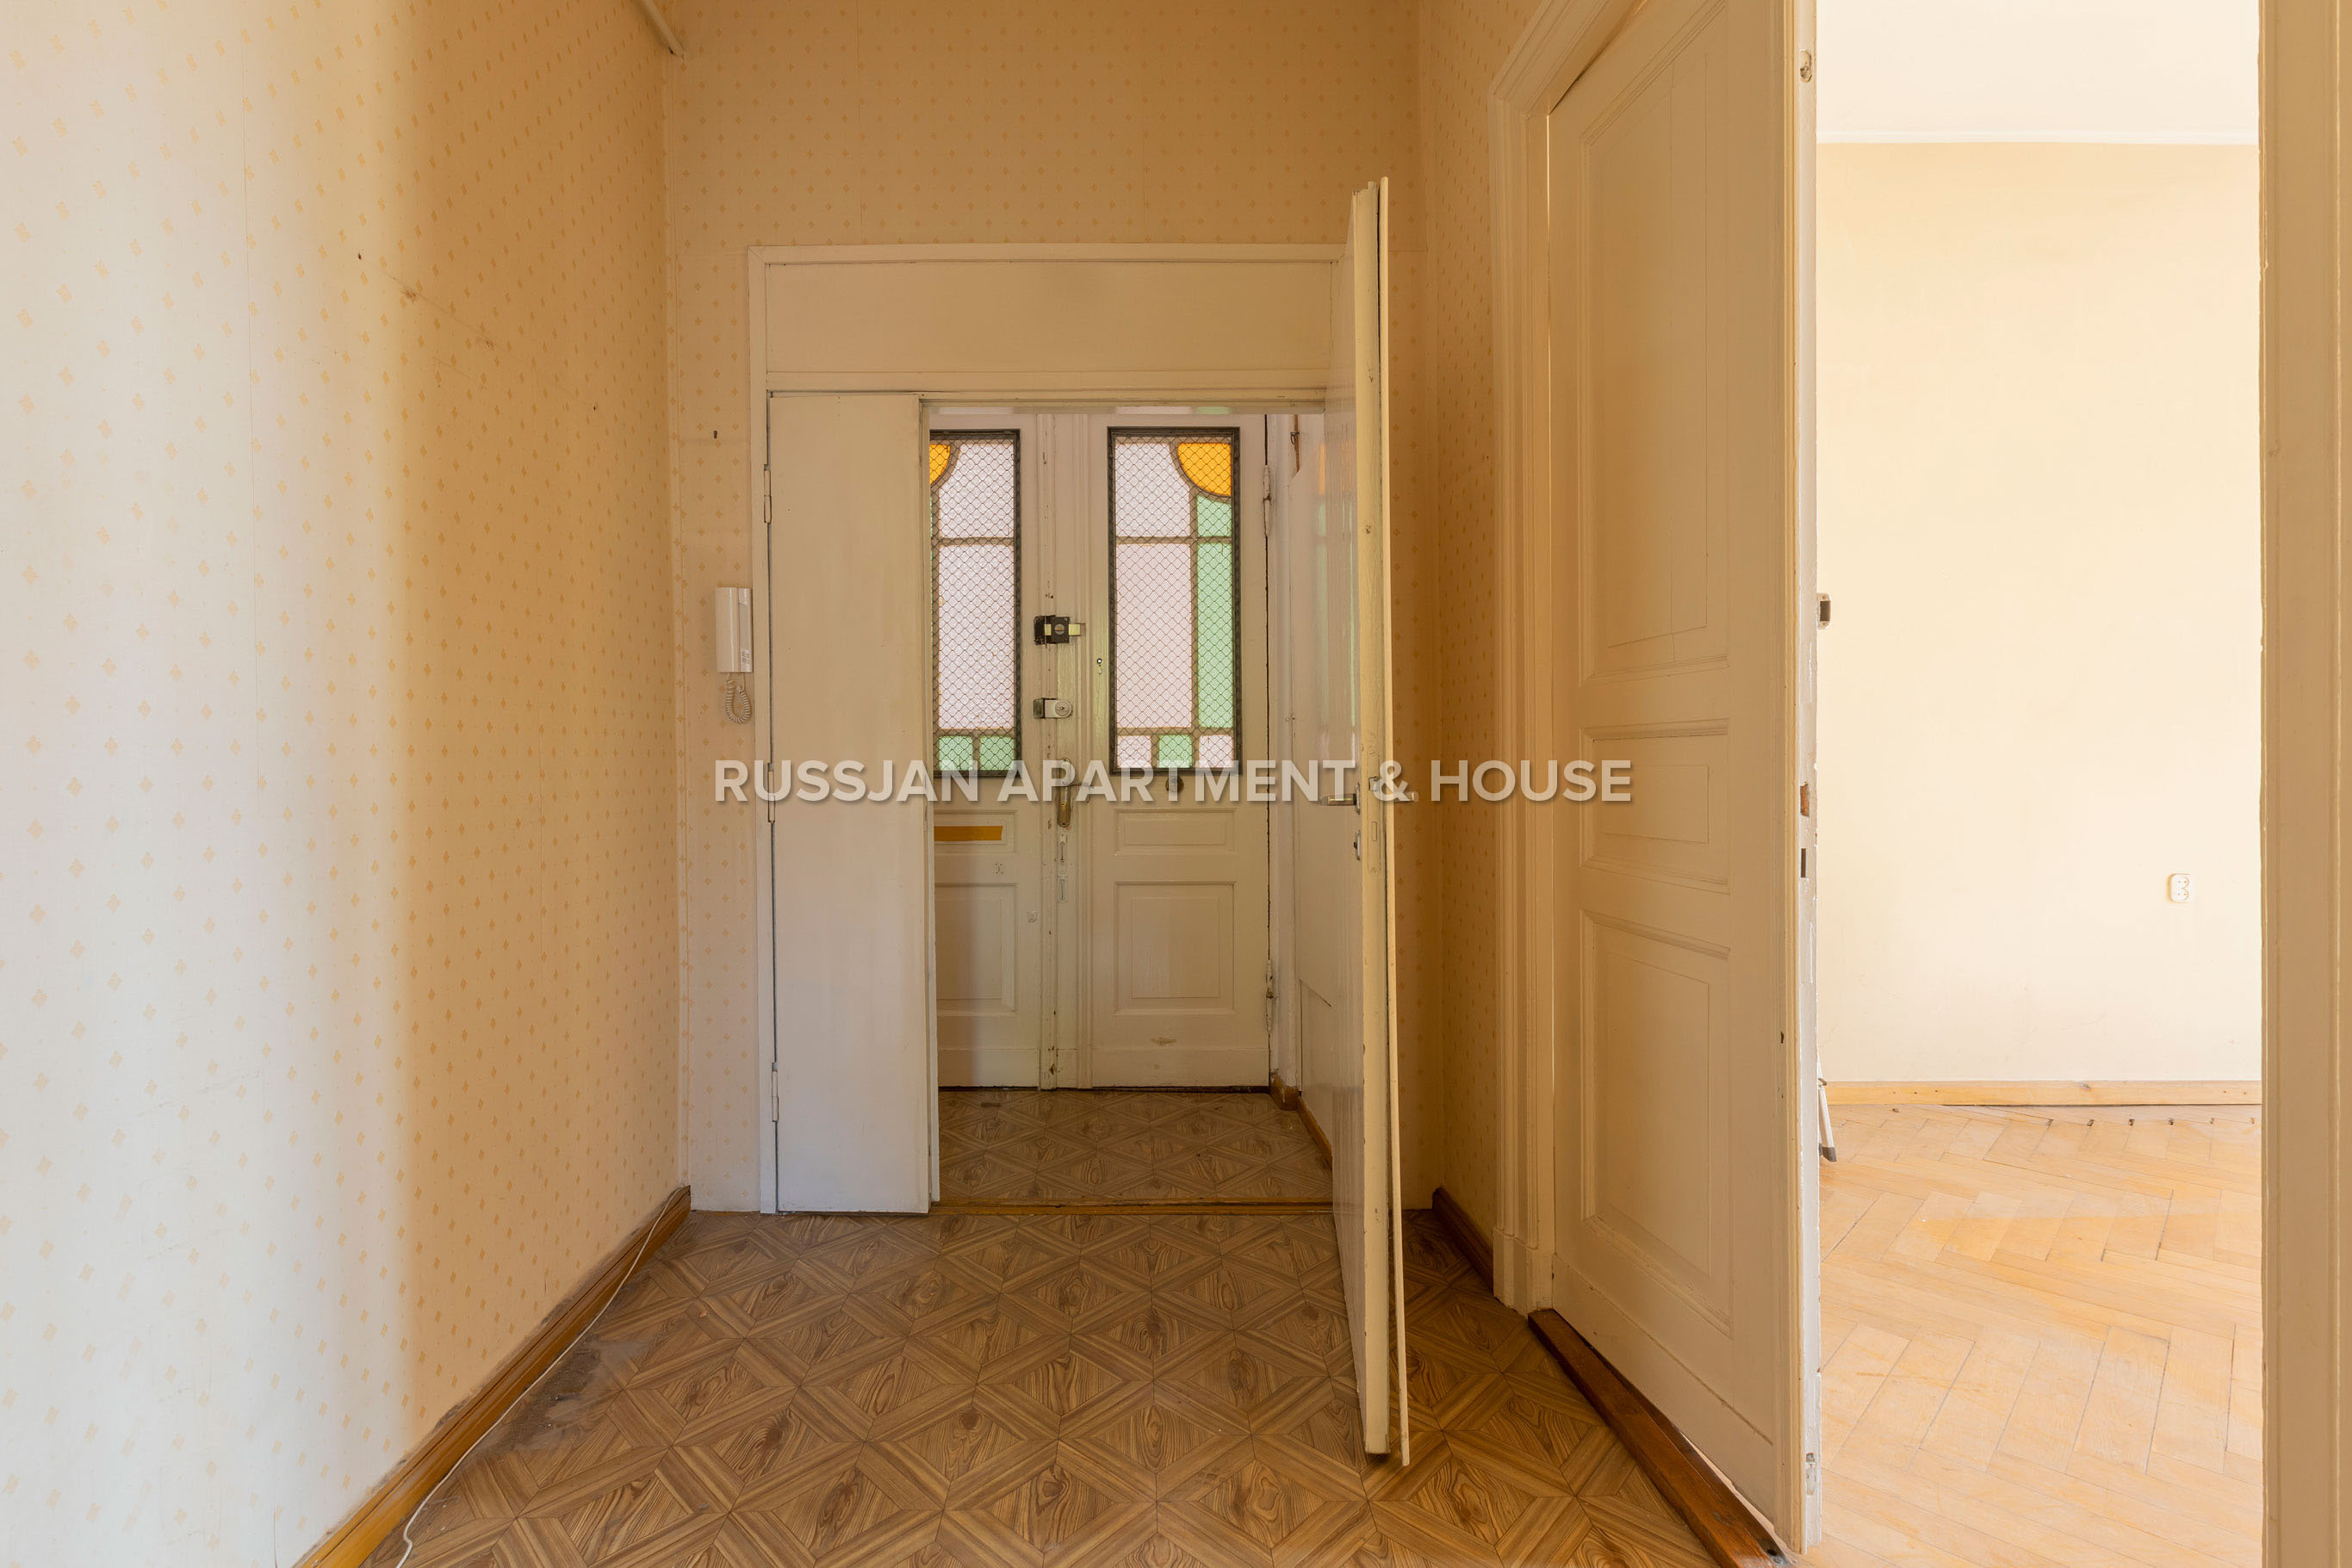 MIESZKANIE SOPOT DOLNY Ulica Haffnera | RUSSJAN Apartment & House